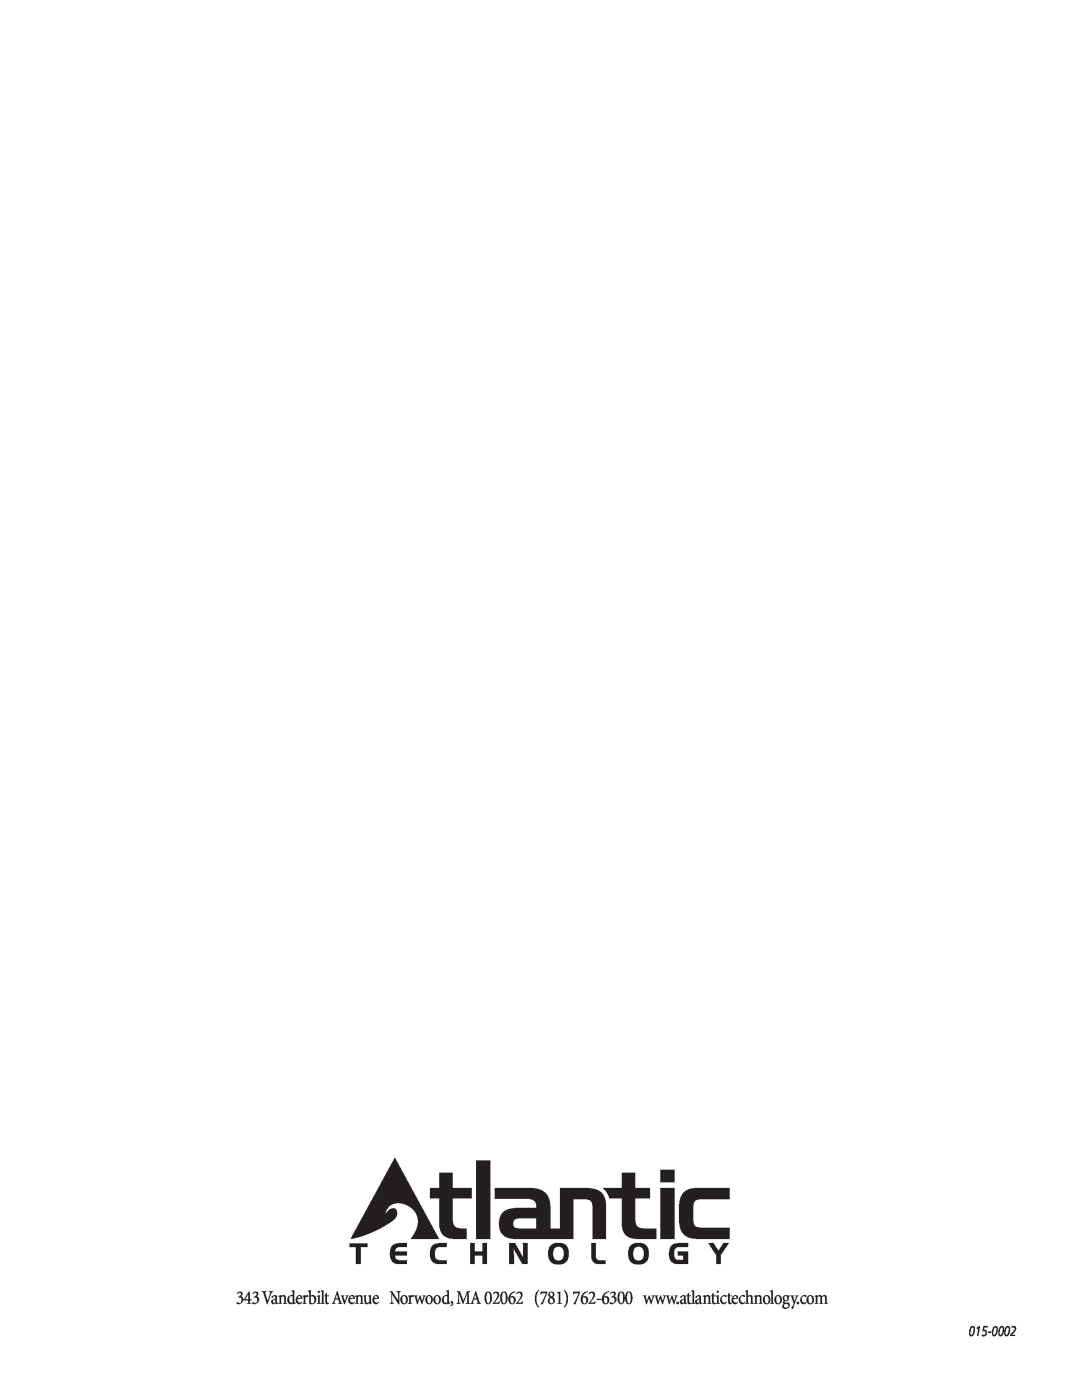 Atlantic Technology AT-2 instruction manual 015-0002 